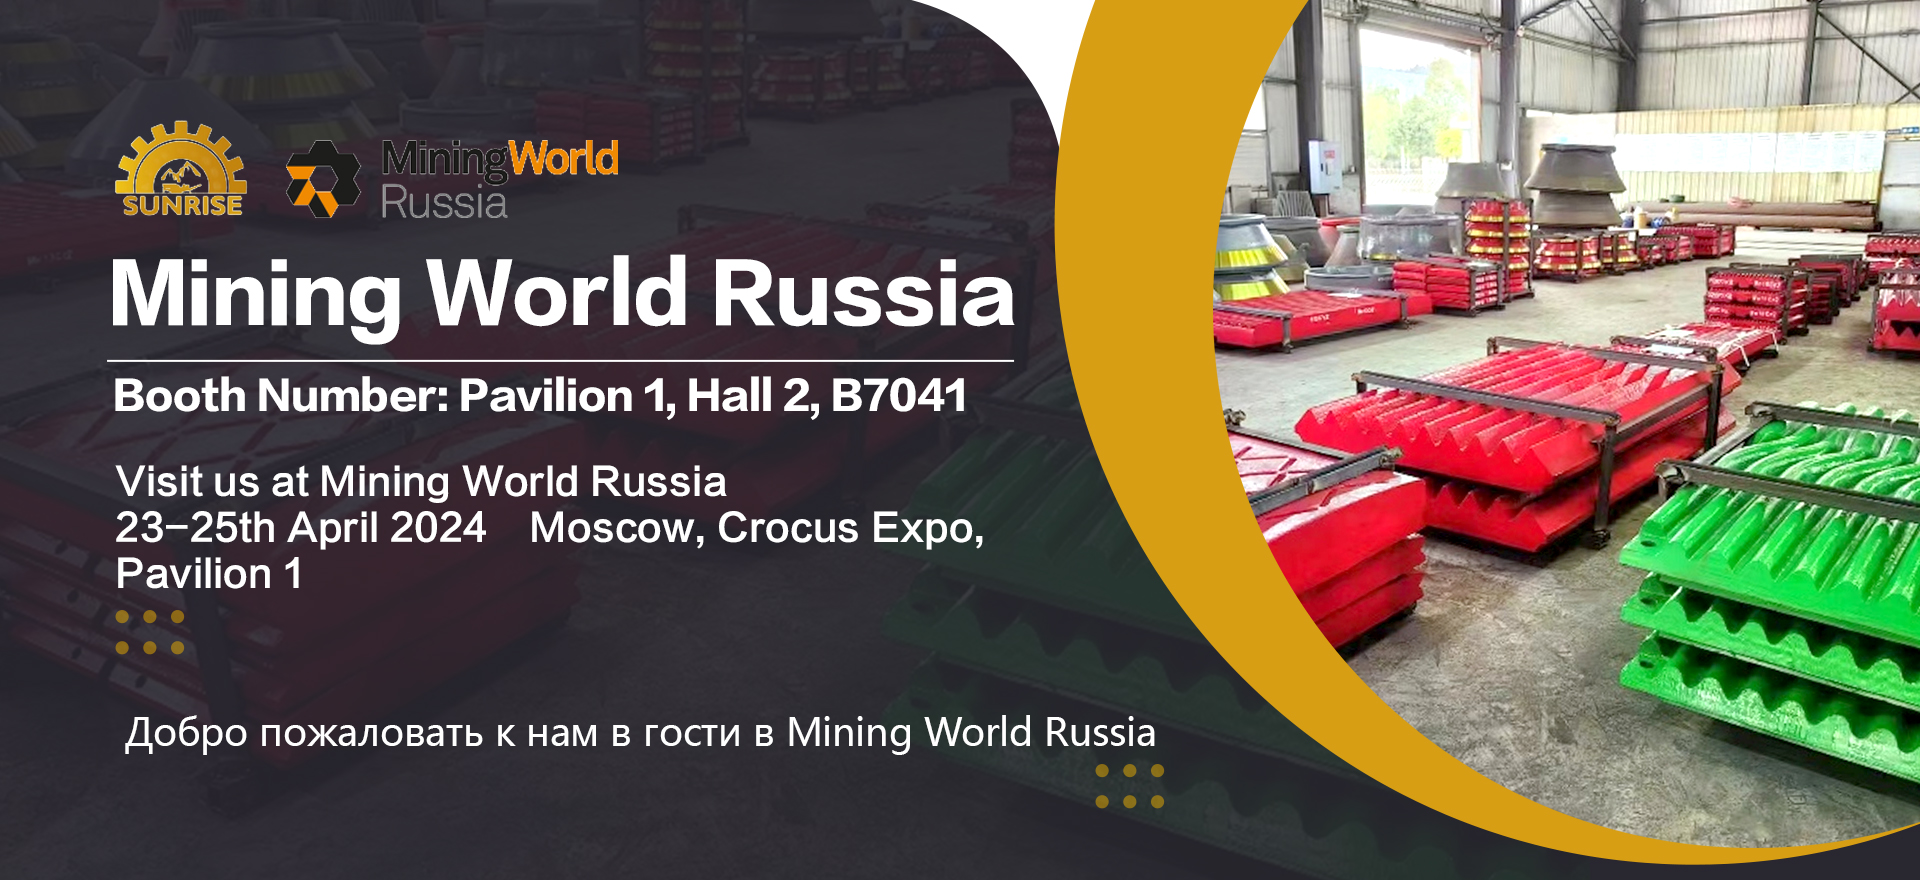 Sunrise Mining World Rusija